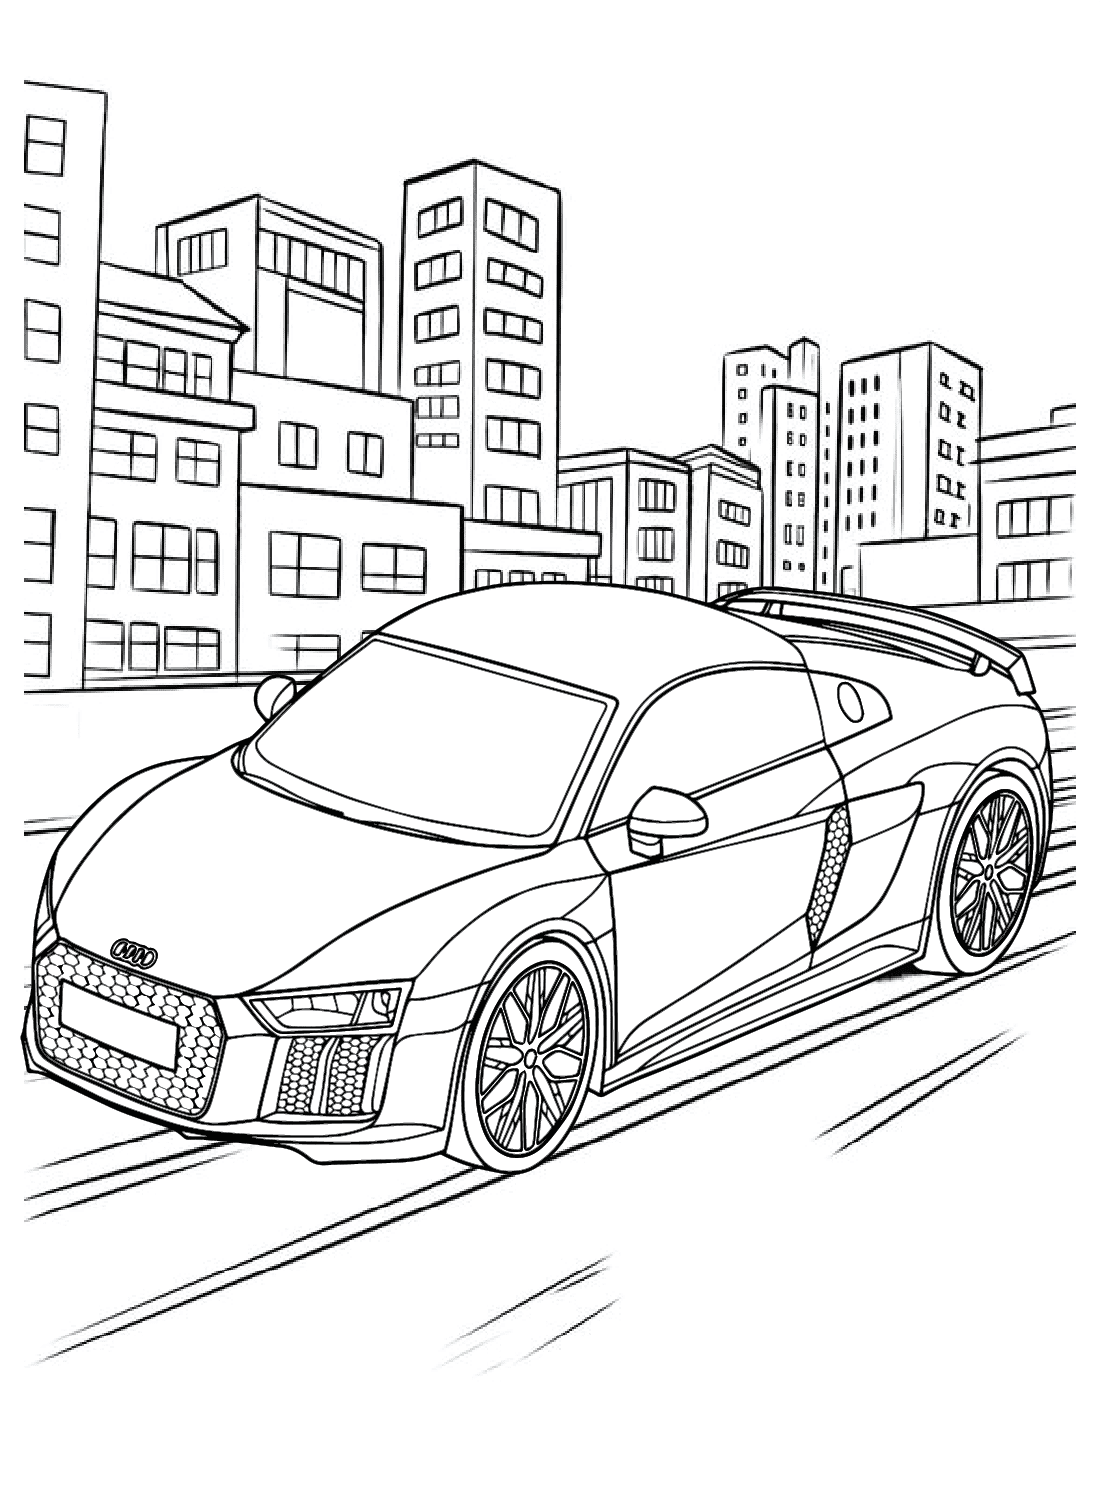 Audi R8 modelkleurplaat van Audi